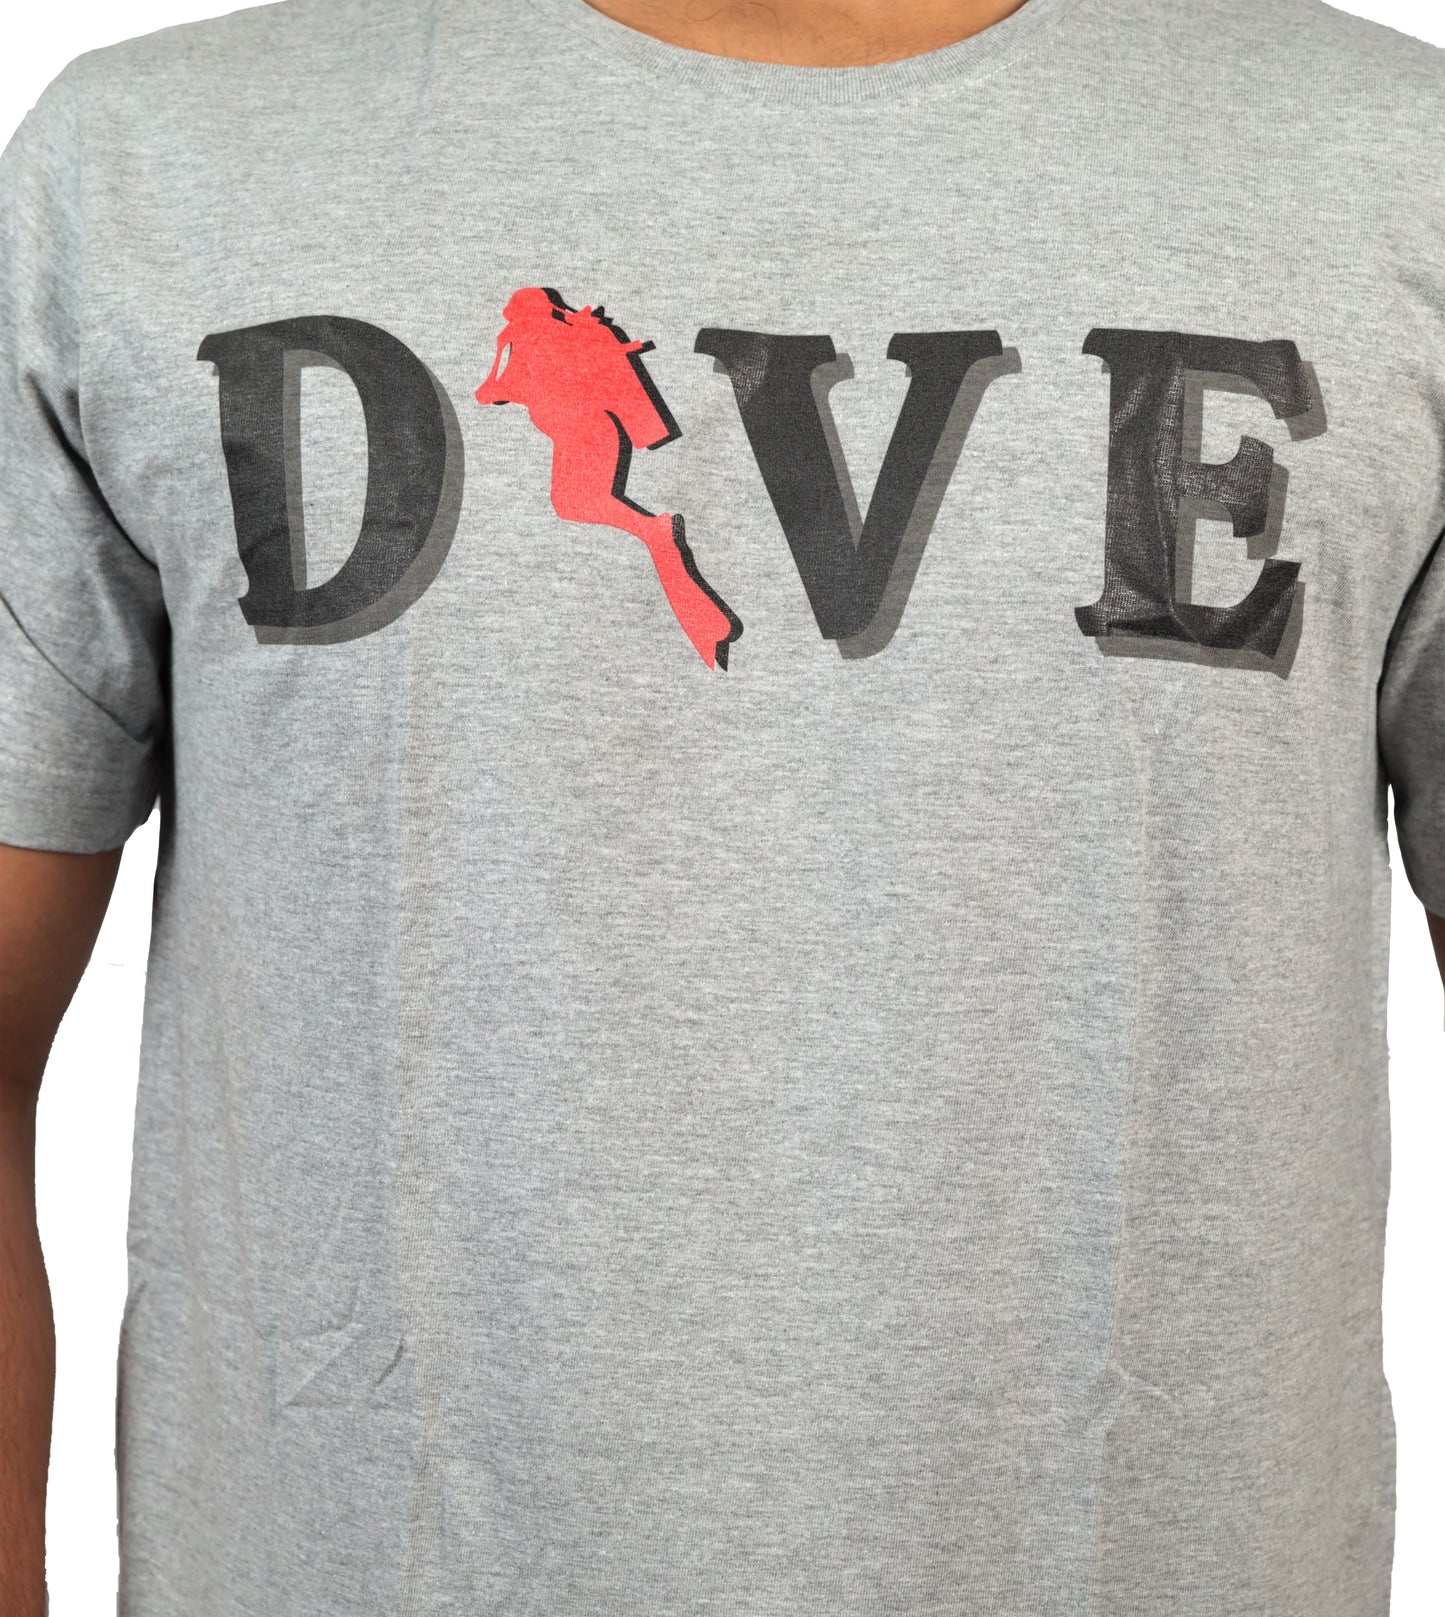 Dive Printed T-Shirt In Grey Color For Men